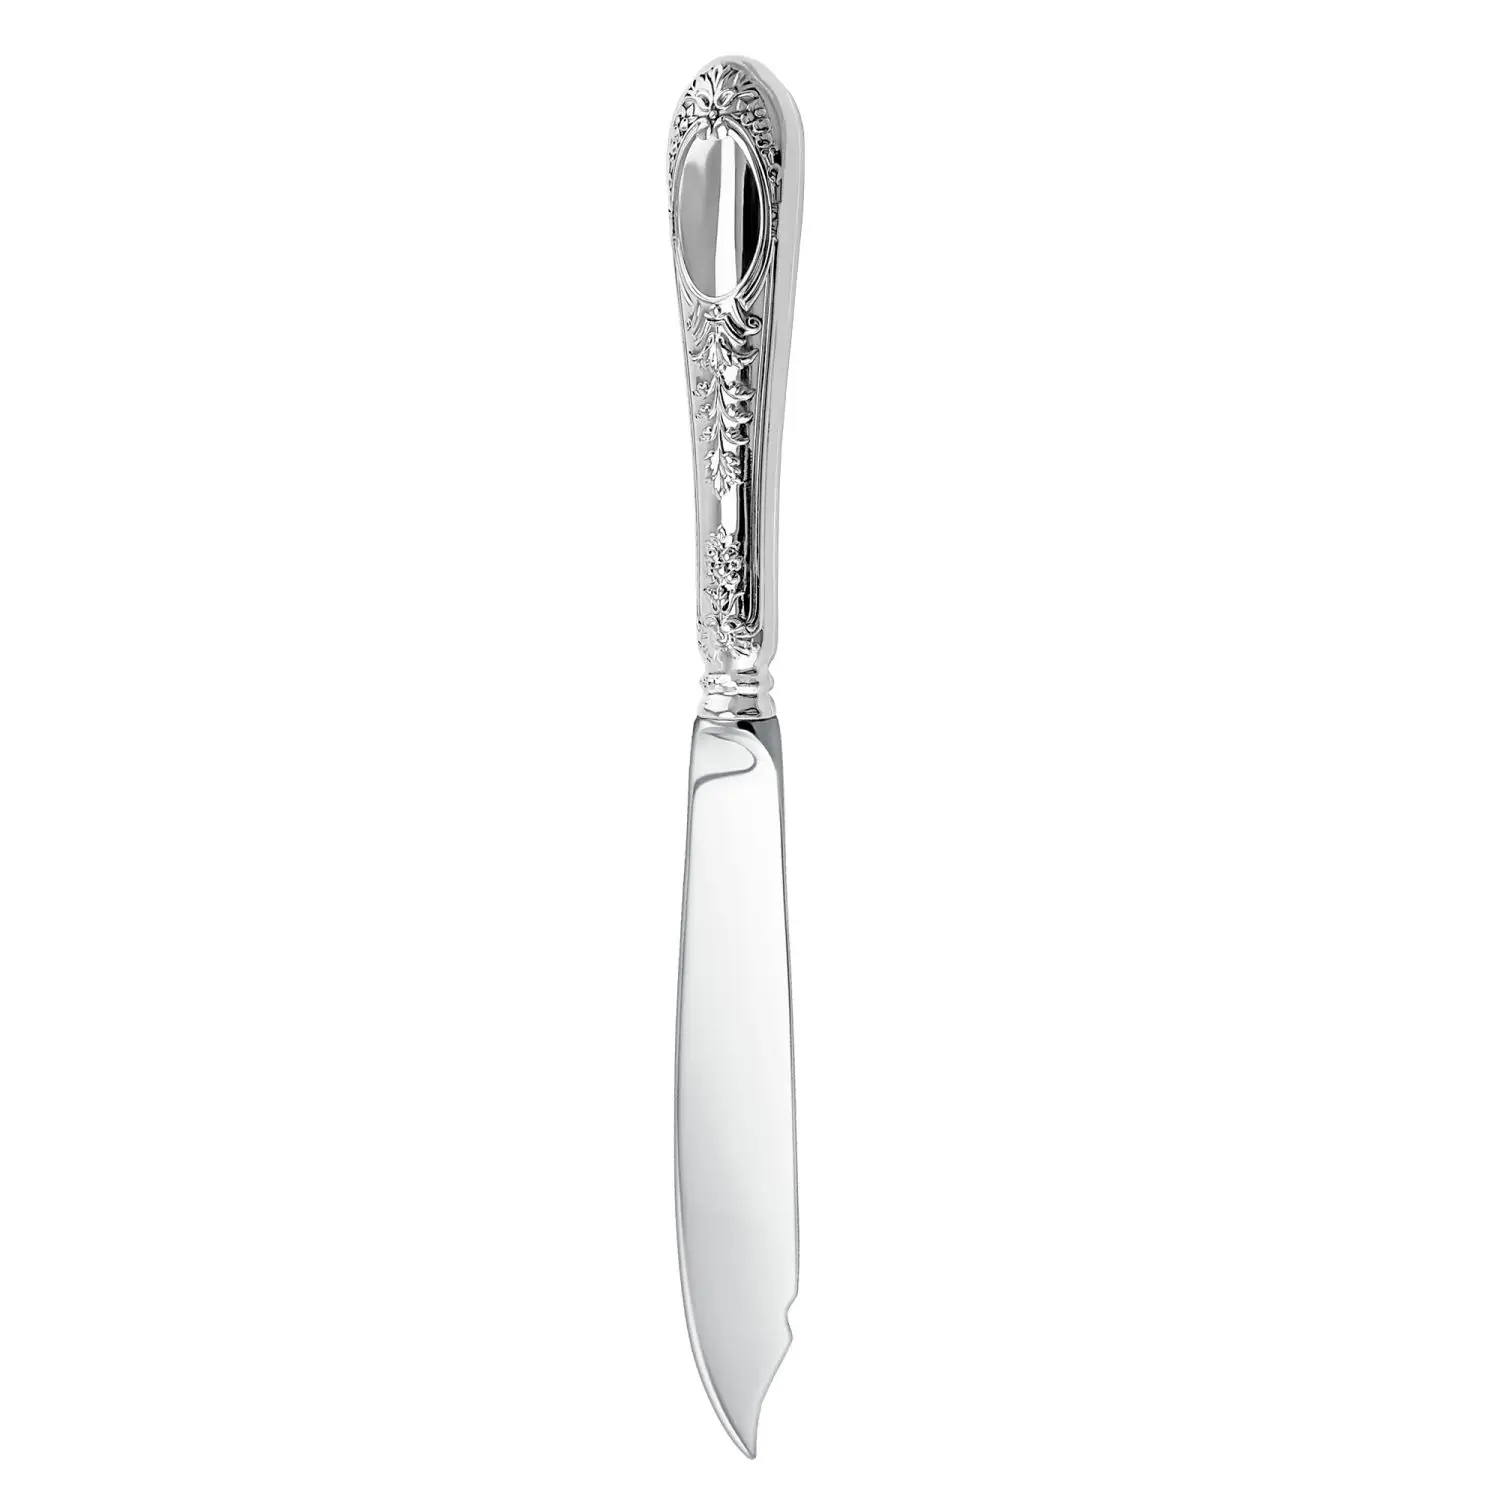 Нож для рыбы Фамильный (Серебро 925) нож для рыбы сильвия 2 серебро 925